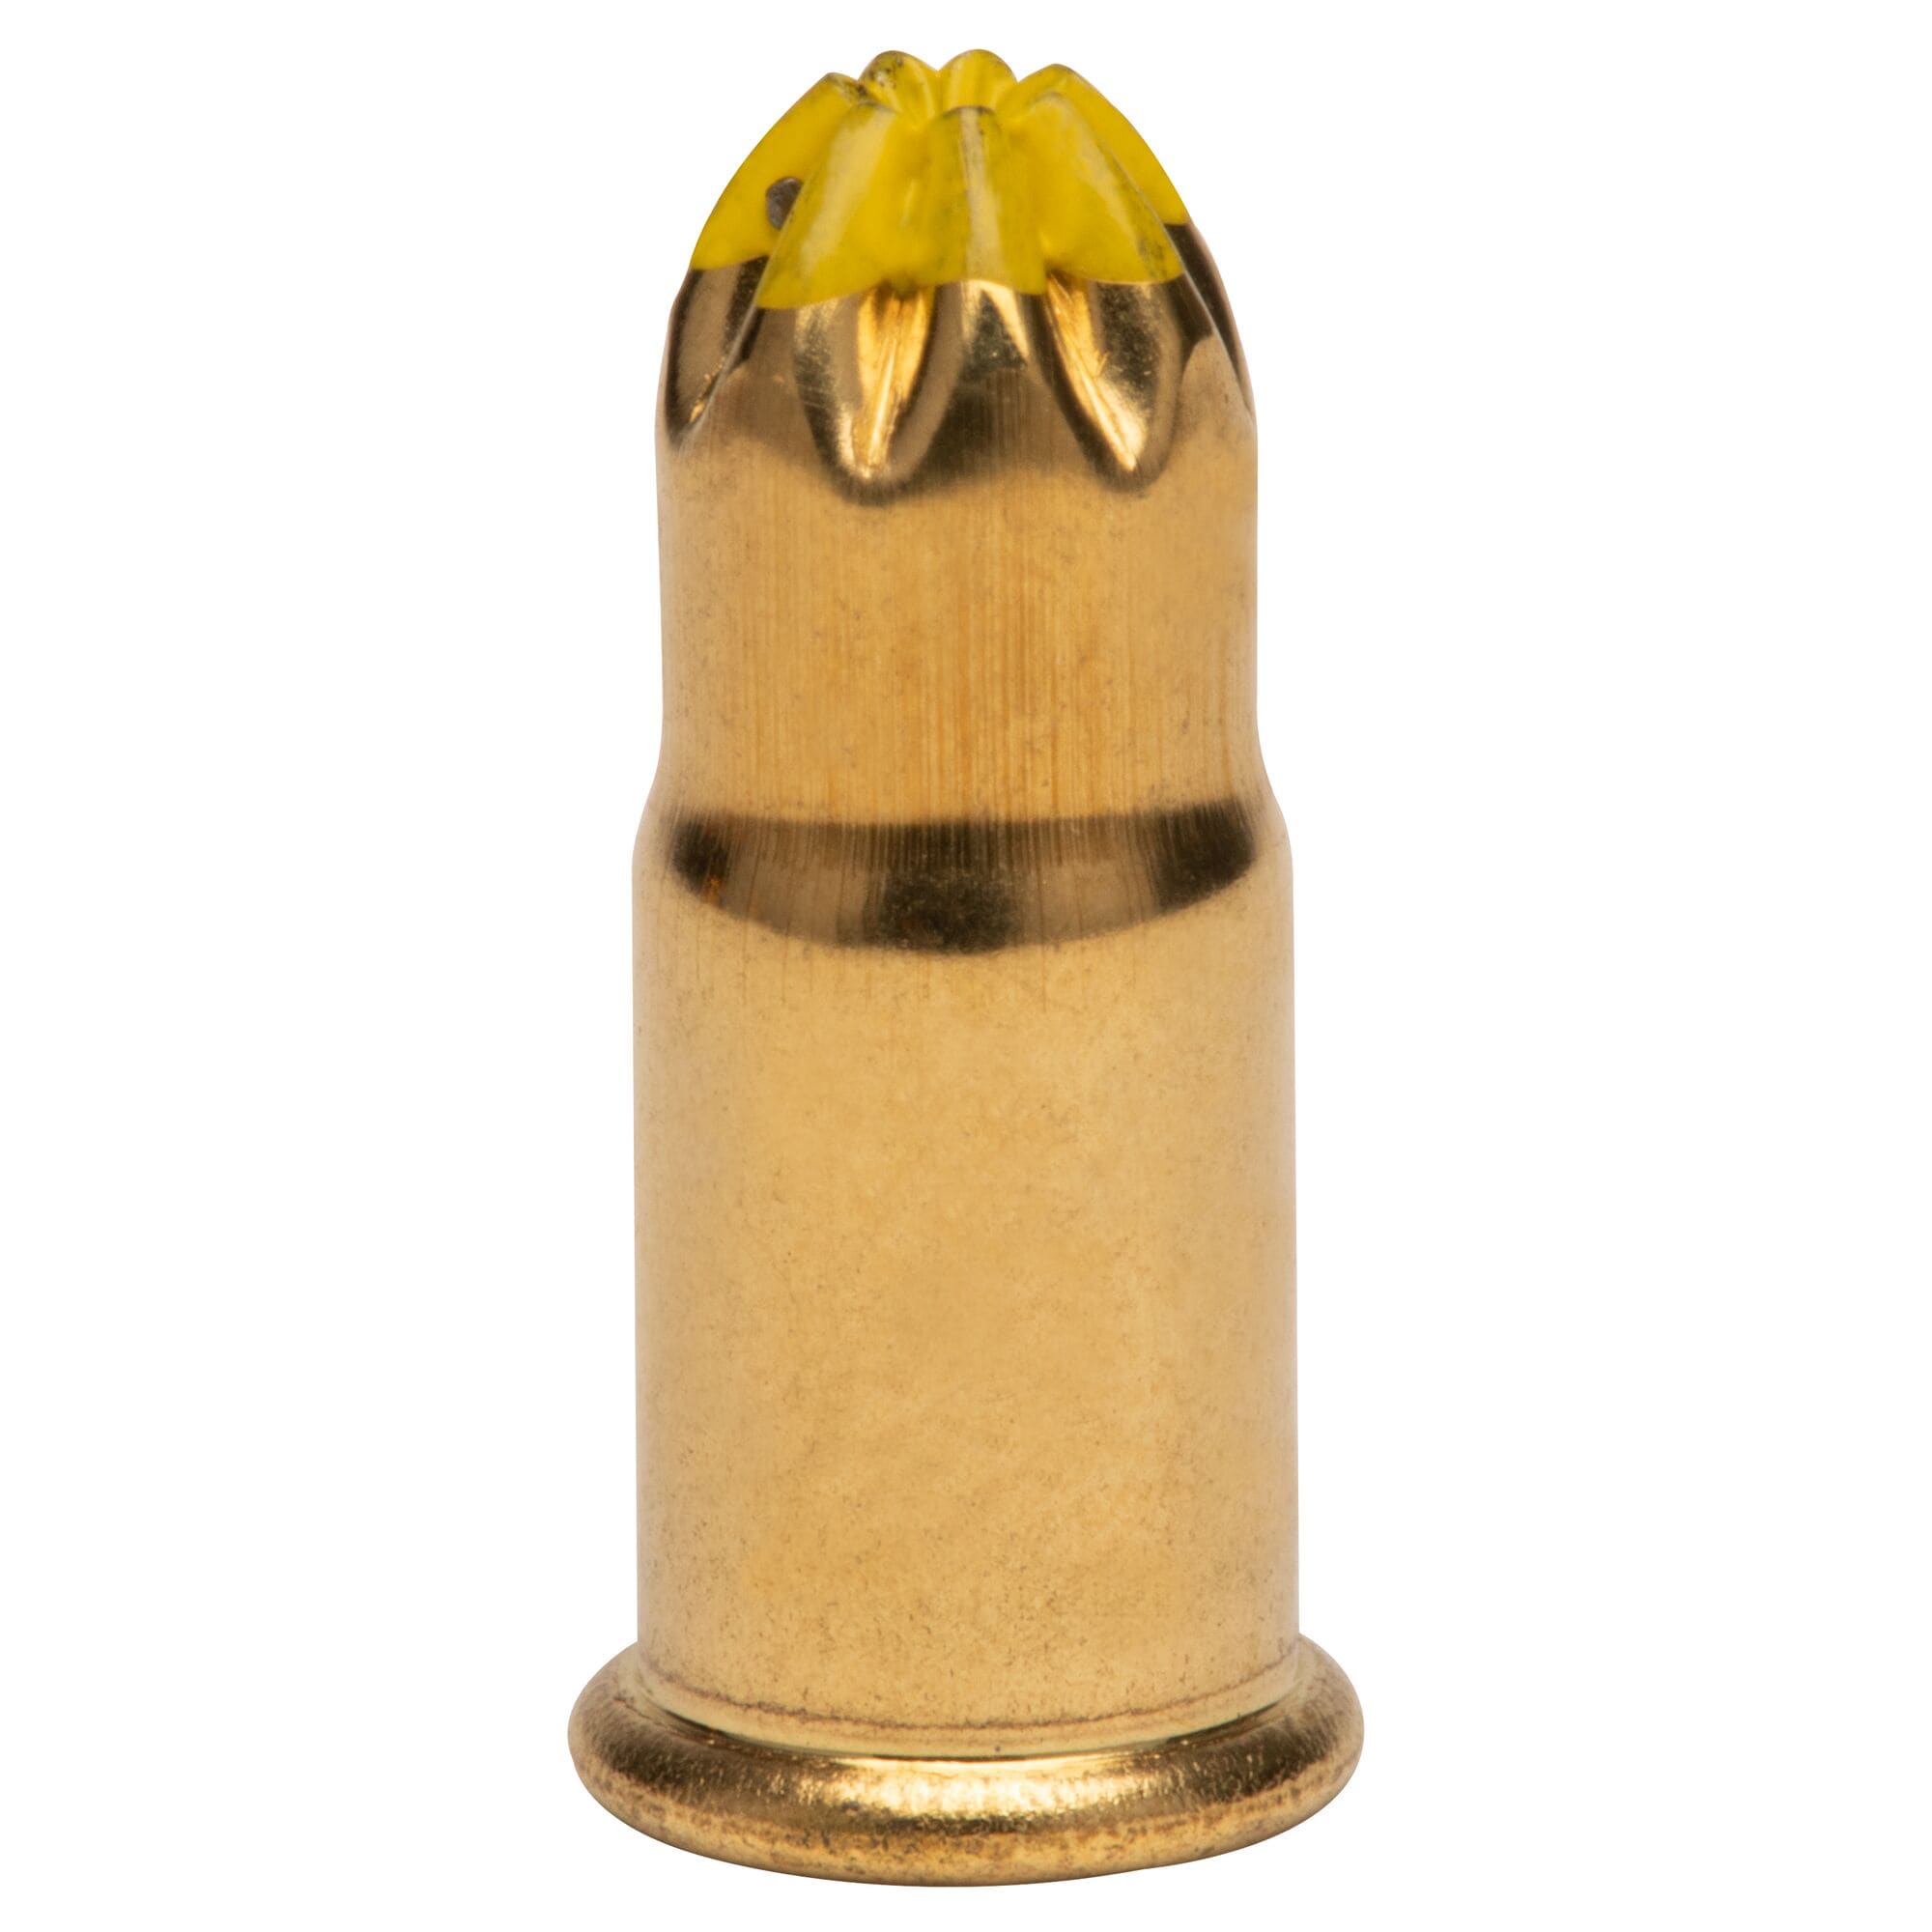 45 Caliber Brass Bullet License Plate Fasteners